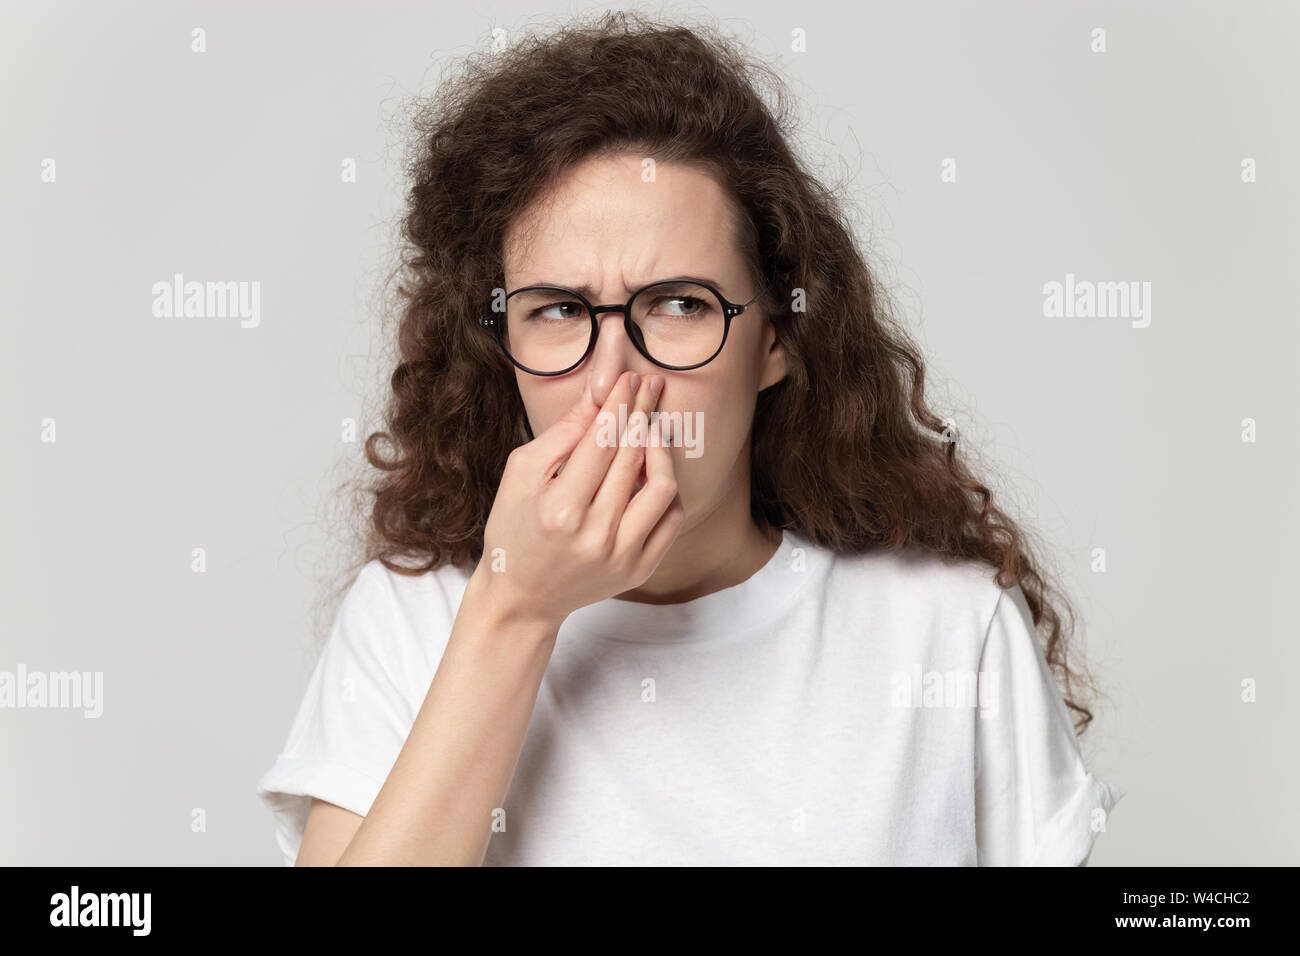 Headshot portrait girl plugs nose feels unpleasant smell studio shot Stock Photo